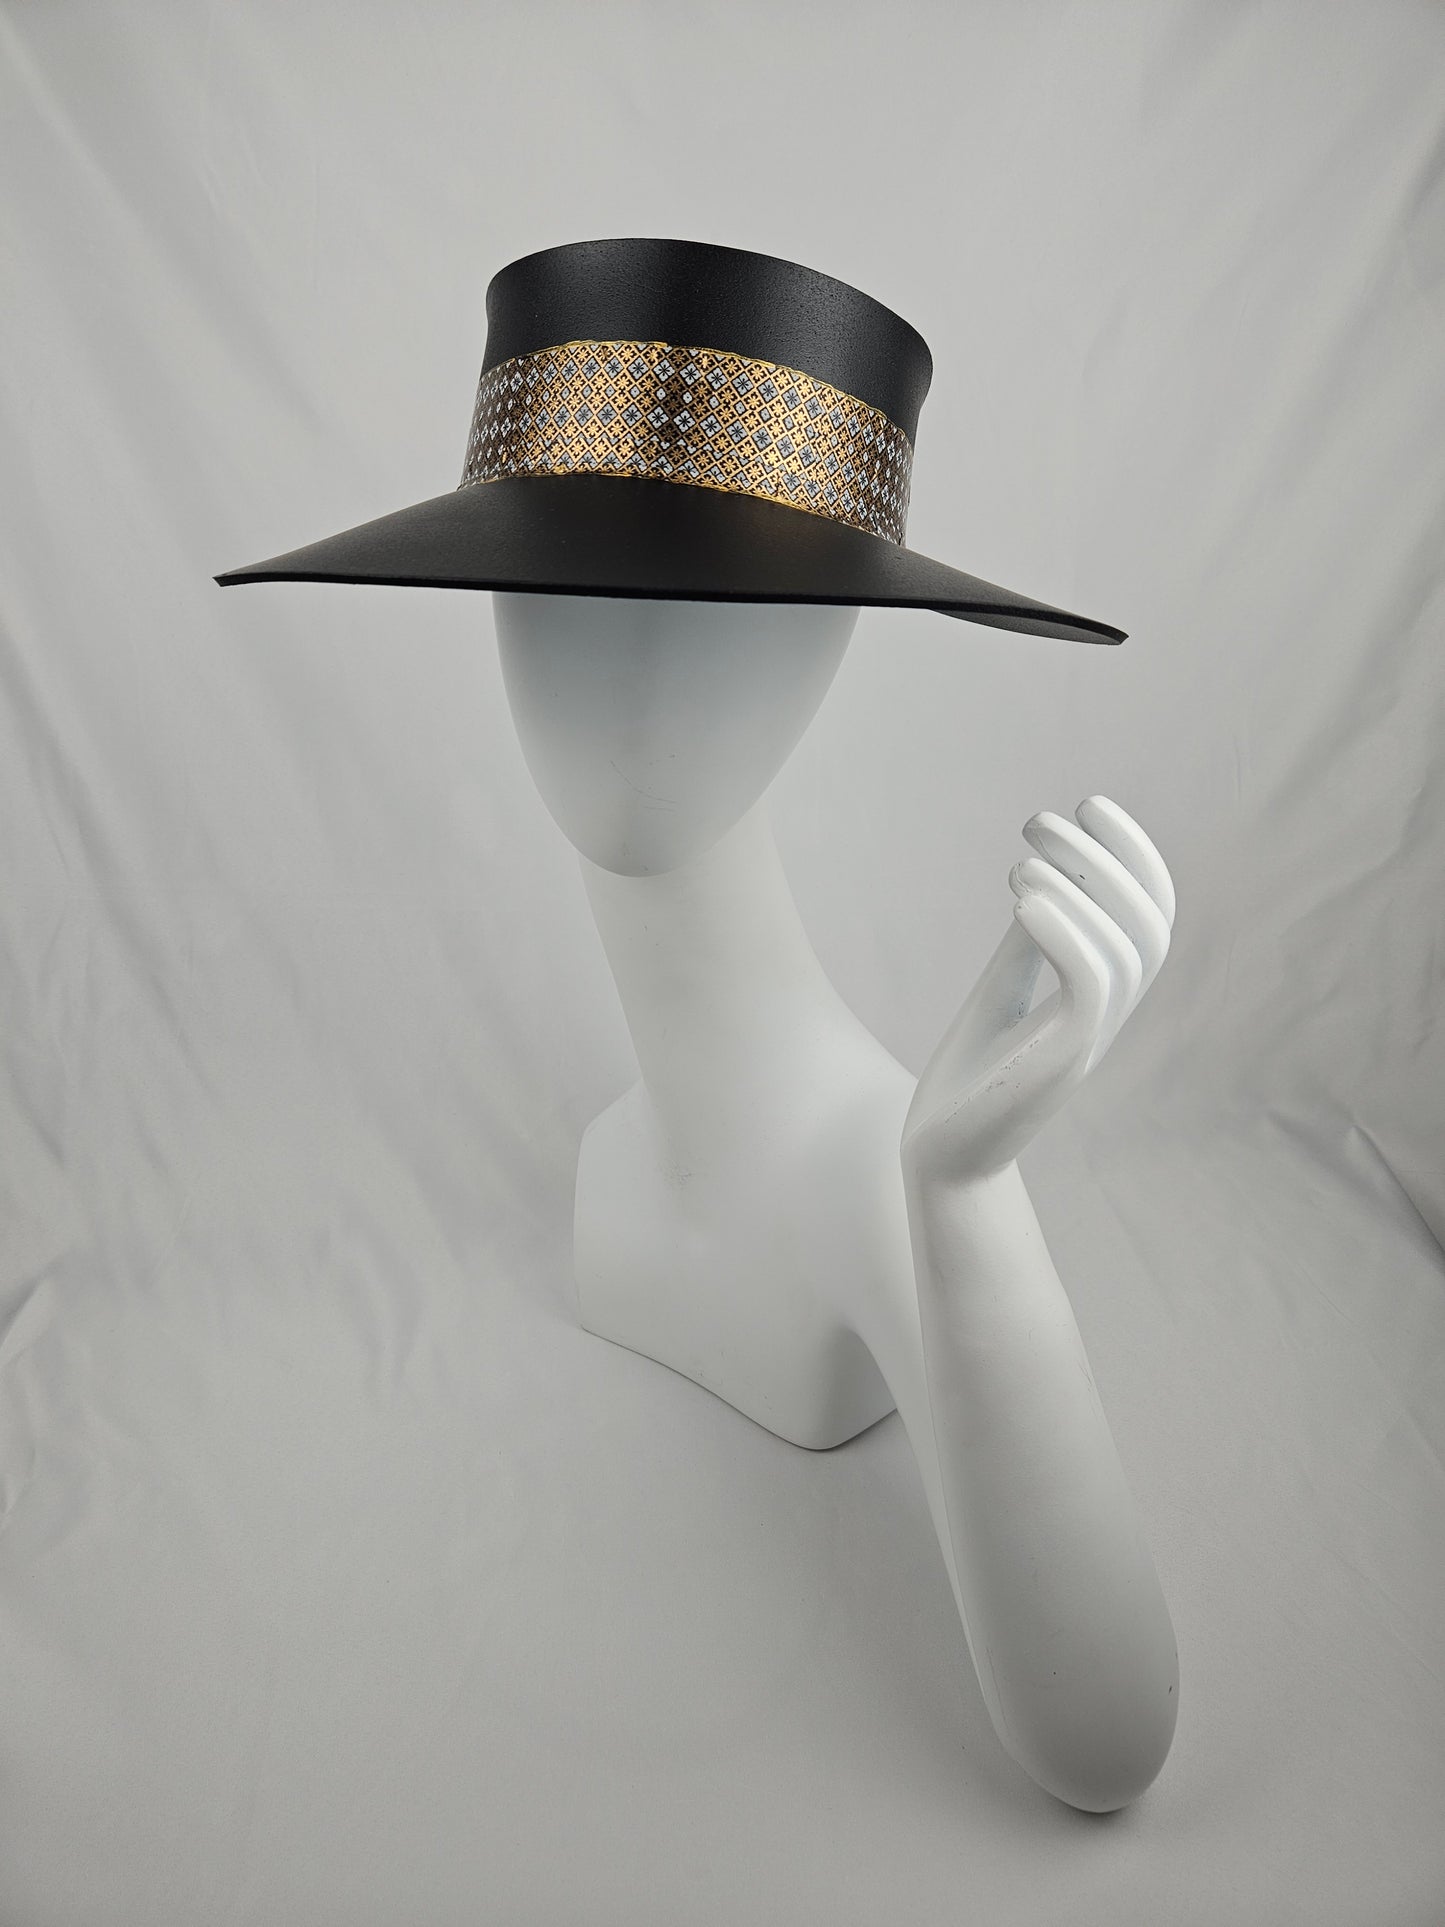 Tall Timeless Black Audrey Foam Sun Visor Hat with Cute Gold and Silver Graphic Band: 1950s, Walks, Brunch, Tea, Golf, Wedding, Church, No Headache, Easter, Pool